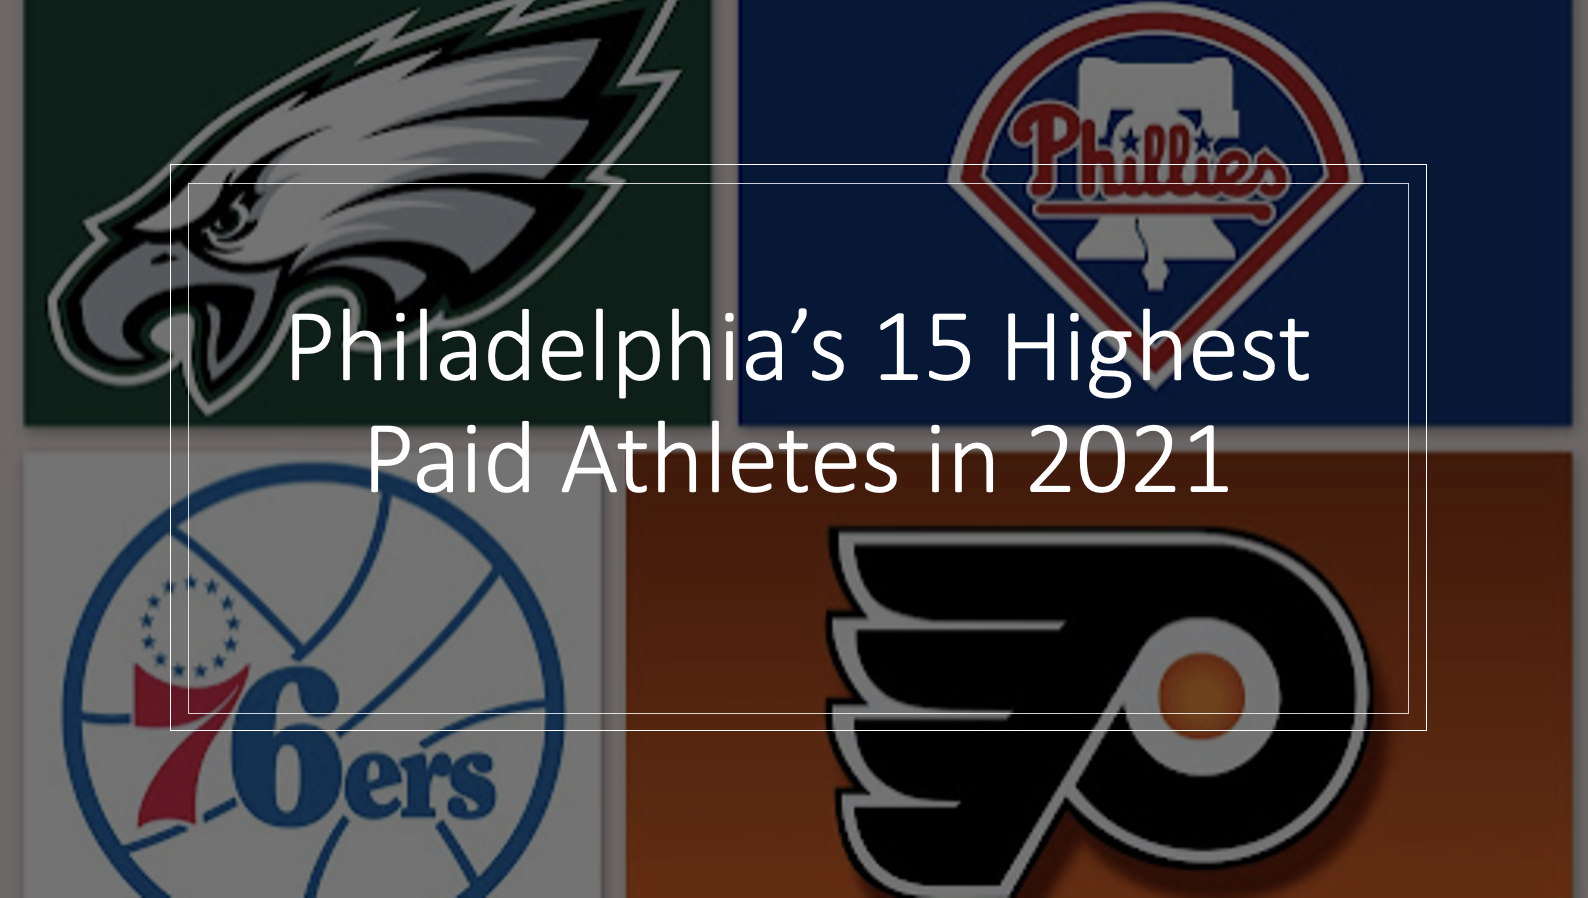 Philadelphia's Highest Paid Athletes in 2021